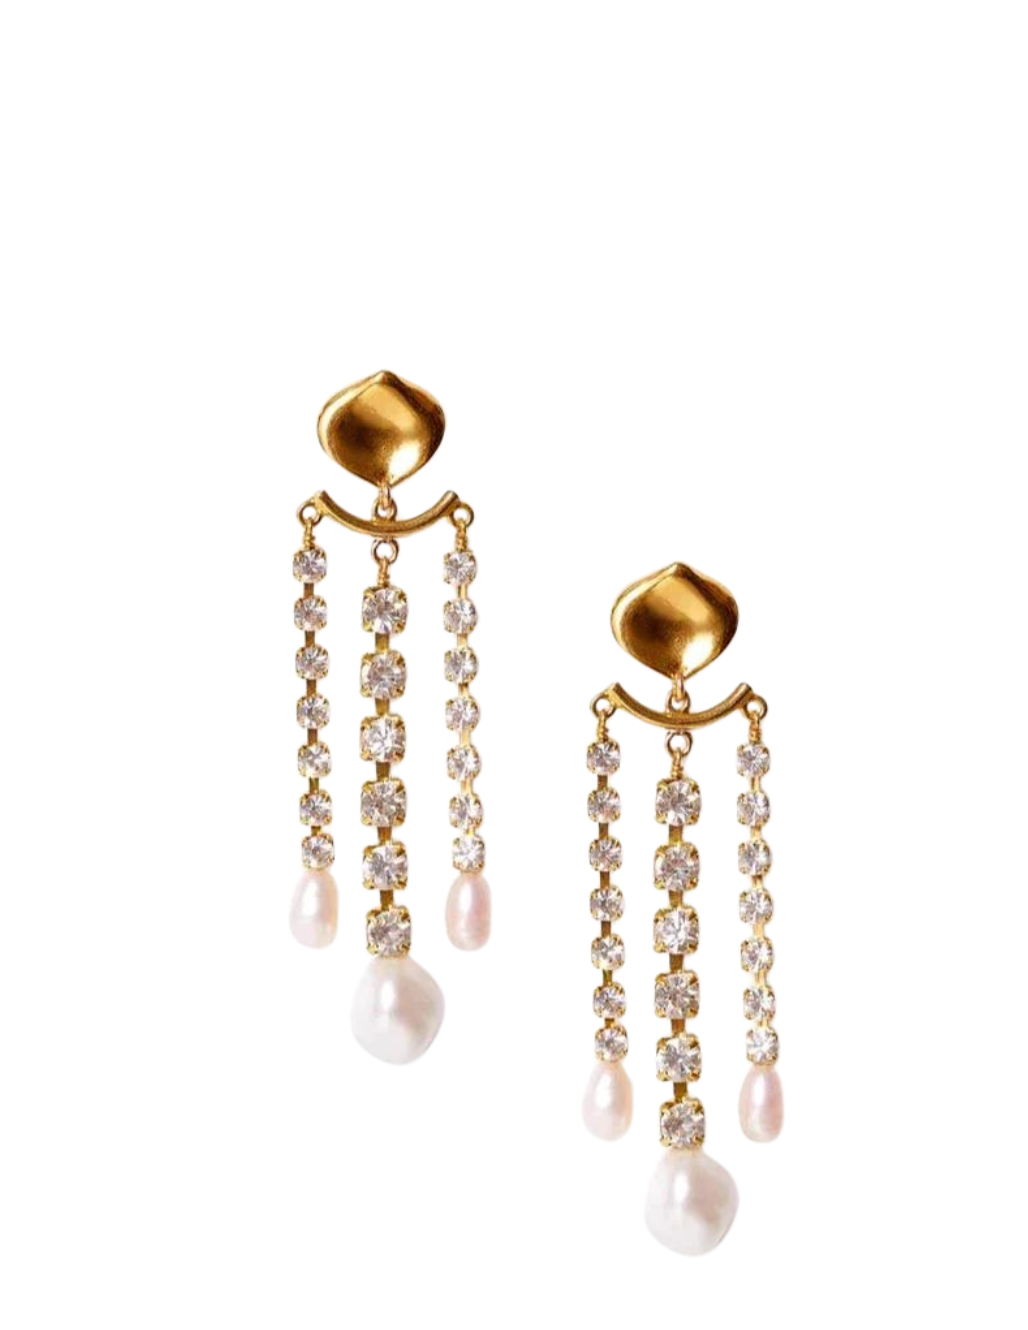 Crystal & Gold Trinidad Earrings